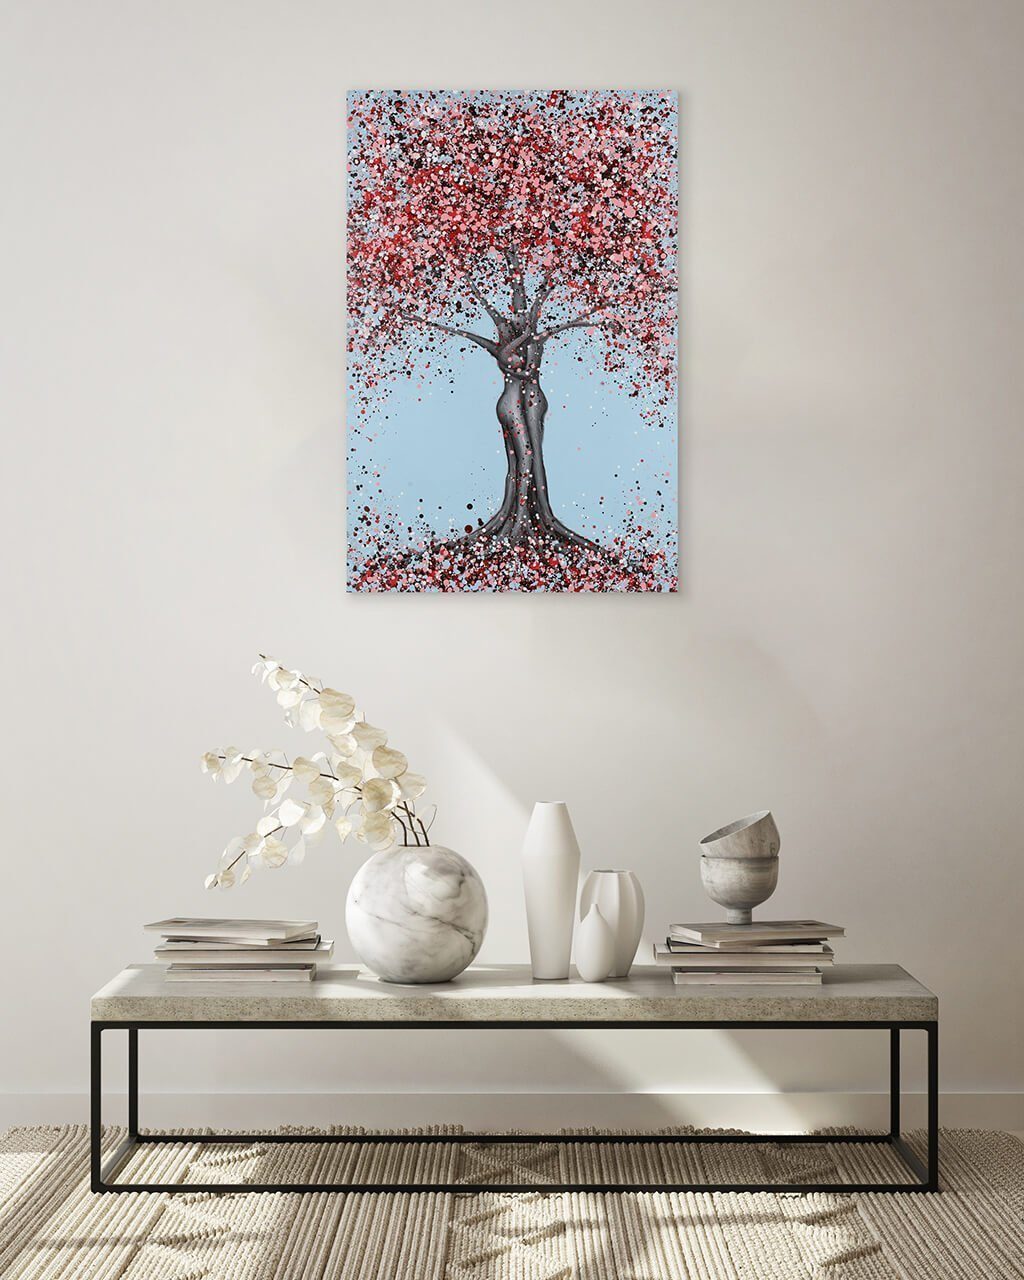 cm, Leinwandbild Wohnzimmer Glorious KUNSTLOFT 60x90 100% HANDGEMALT Spring Wandbild Gemälde